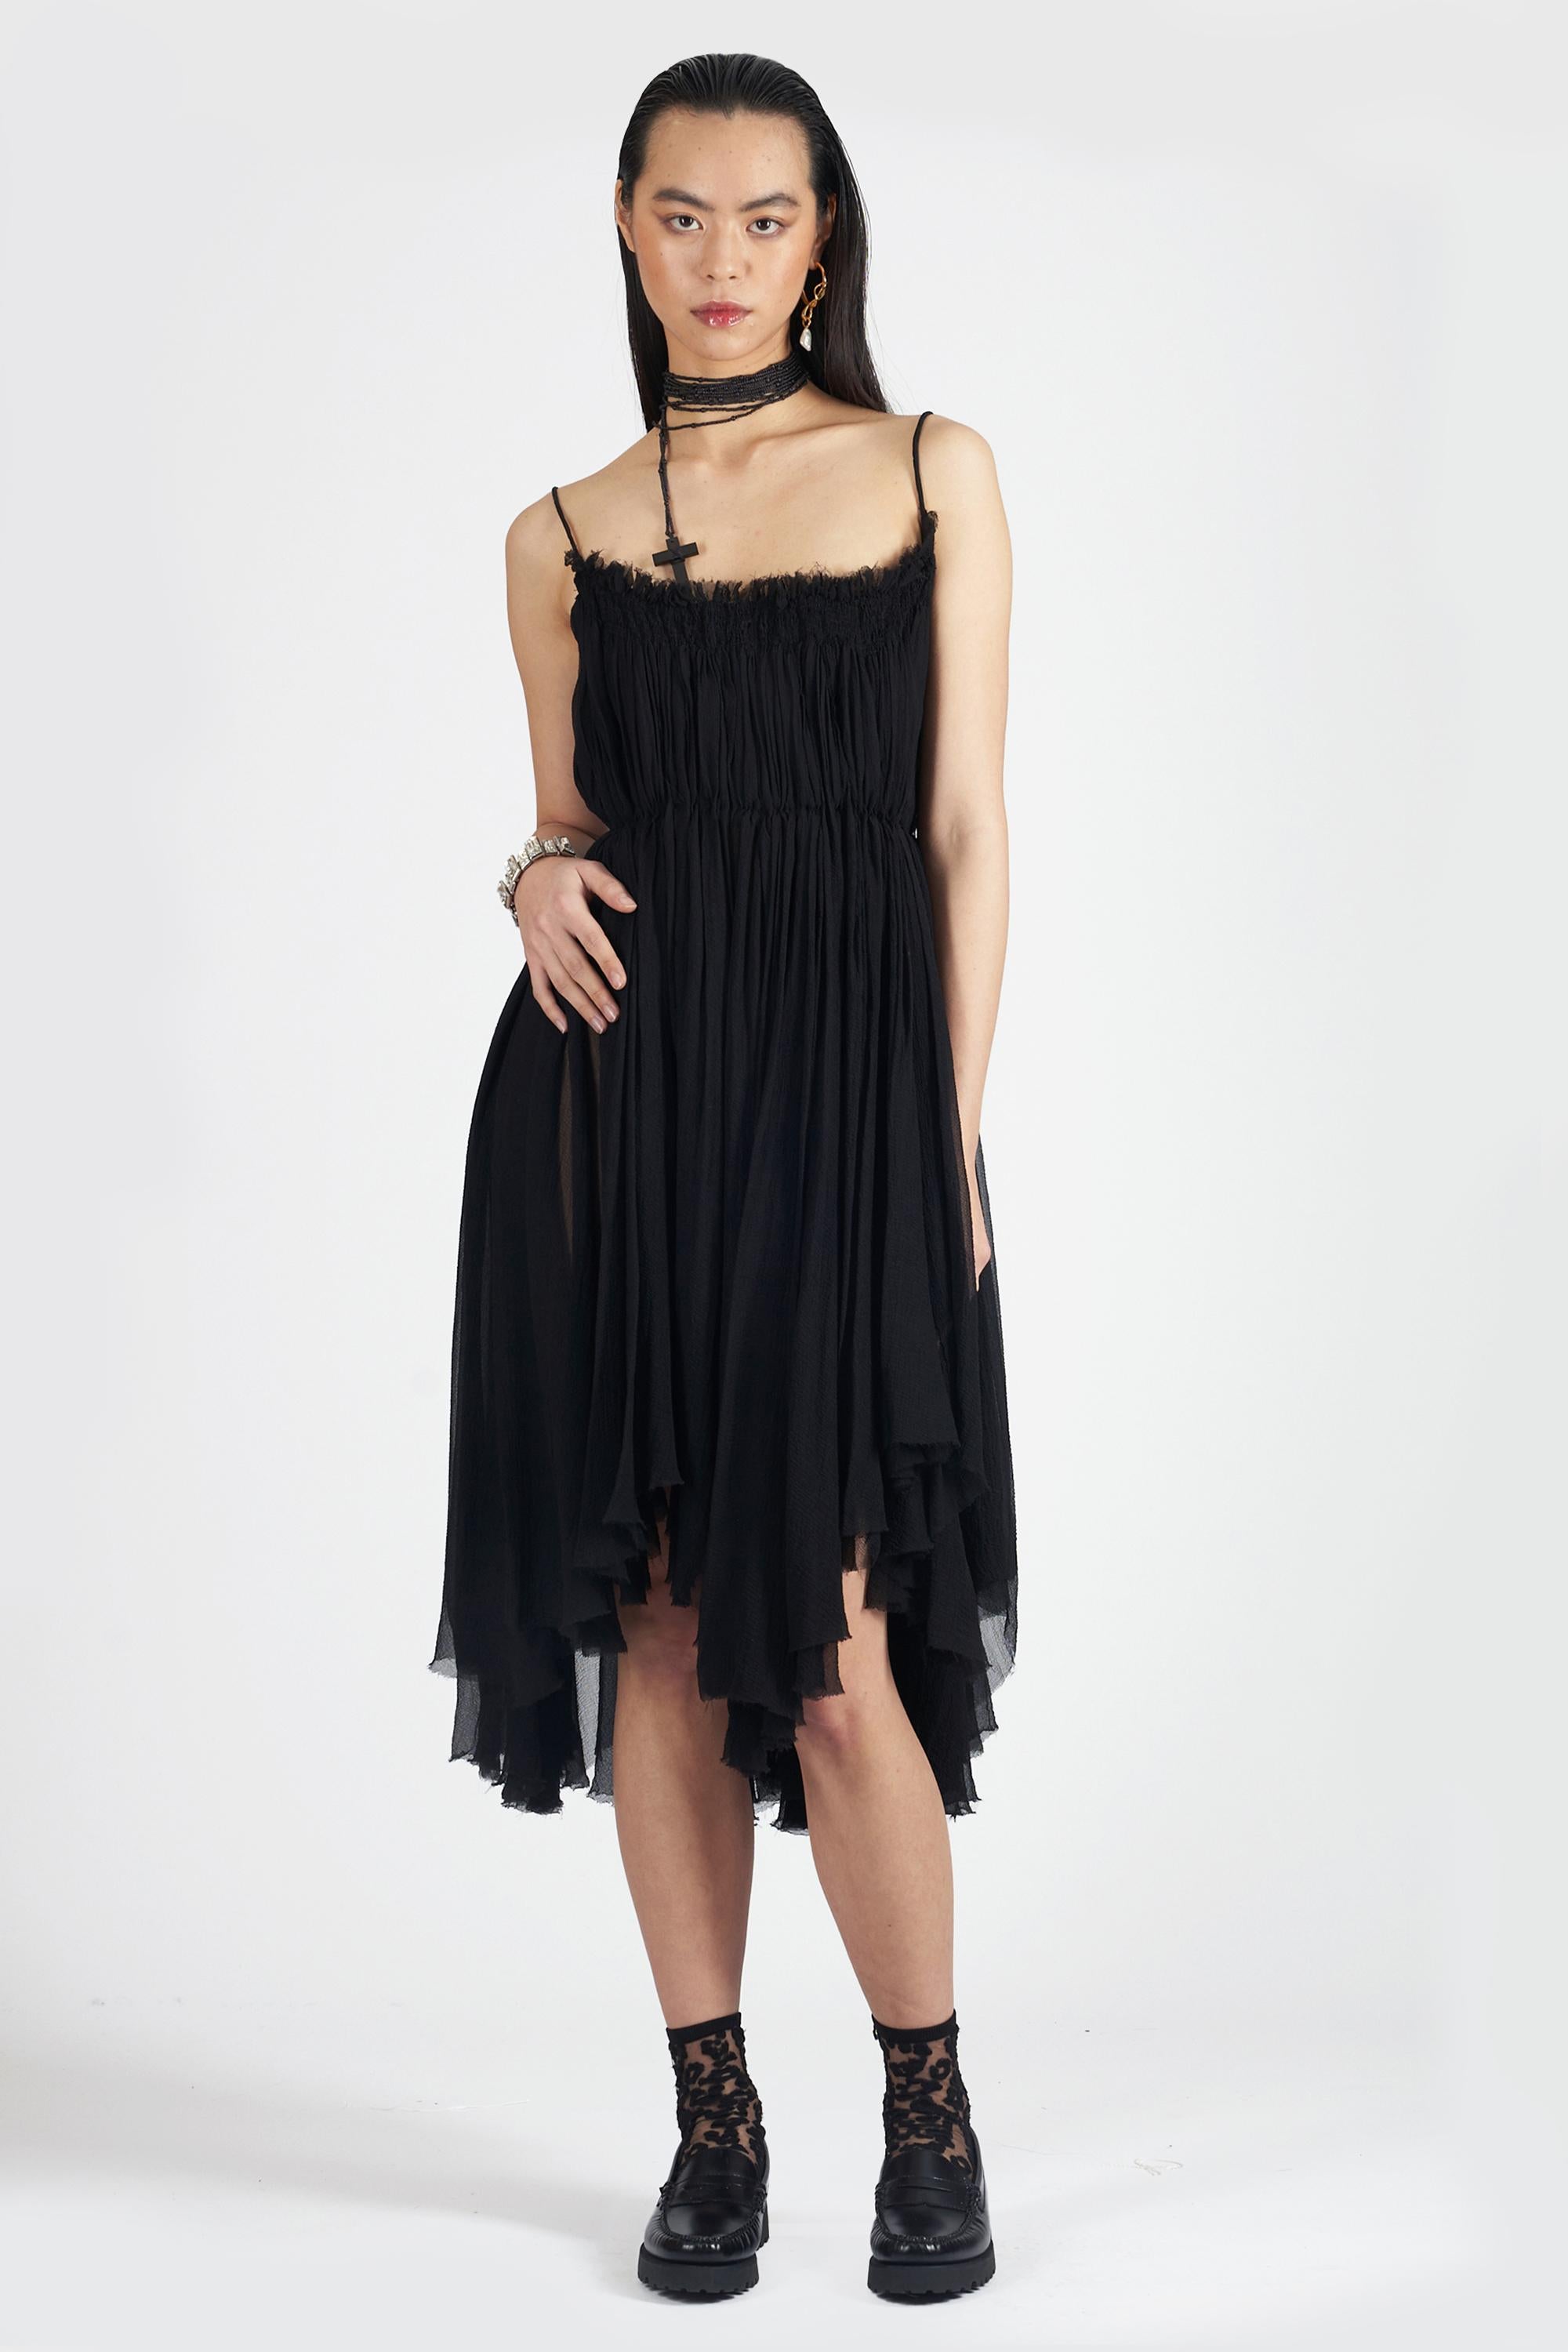 Women's Alexander McQueen Vintage S/S RTW 2003 Harness Silk Dress For Sale